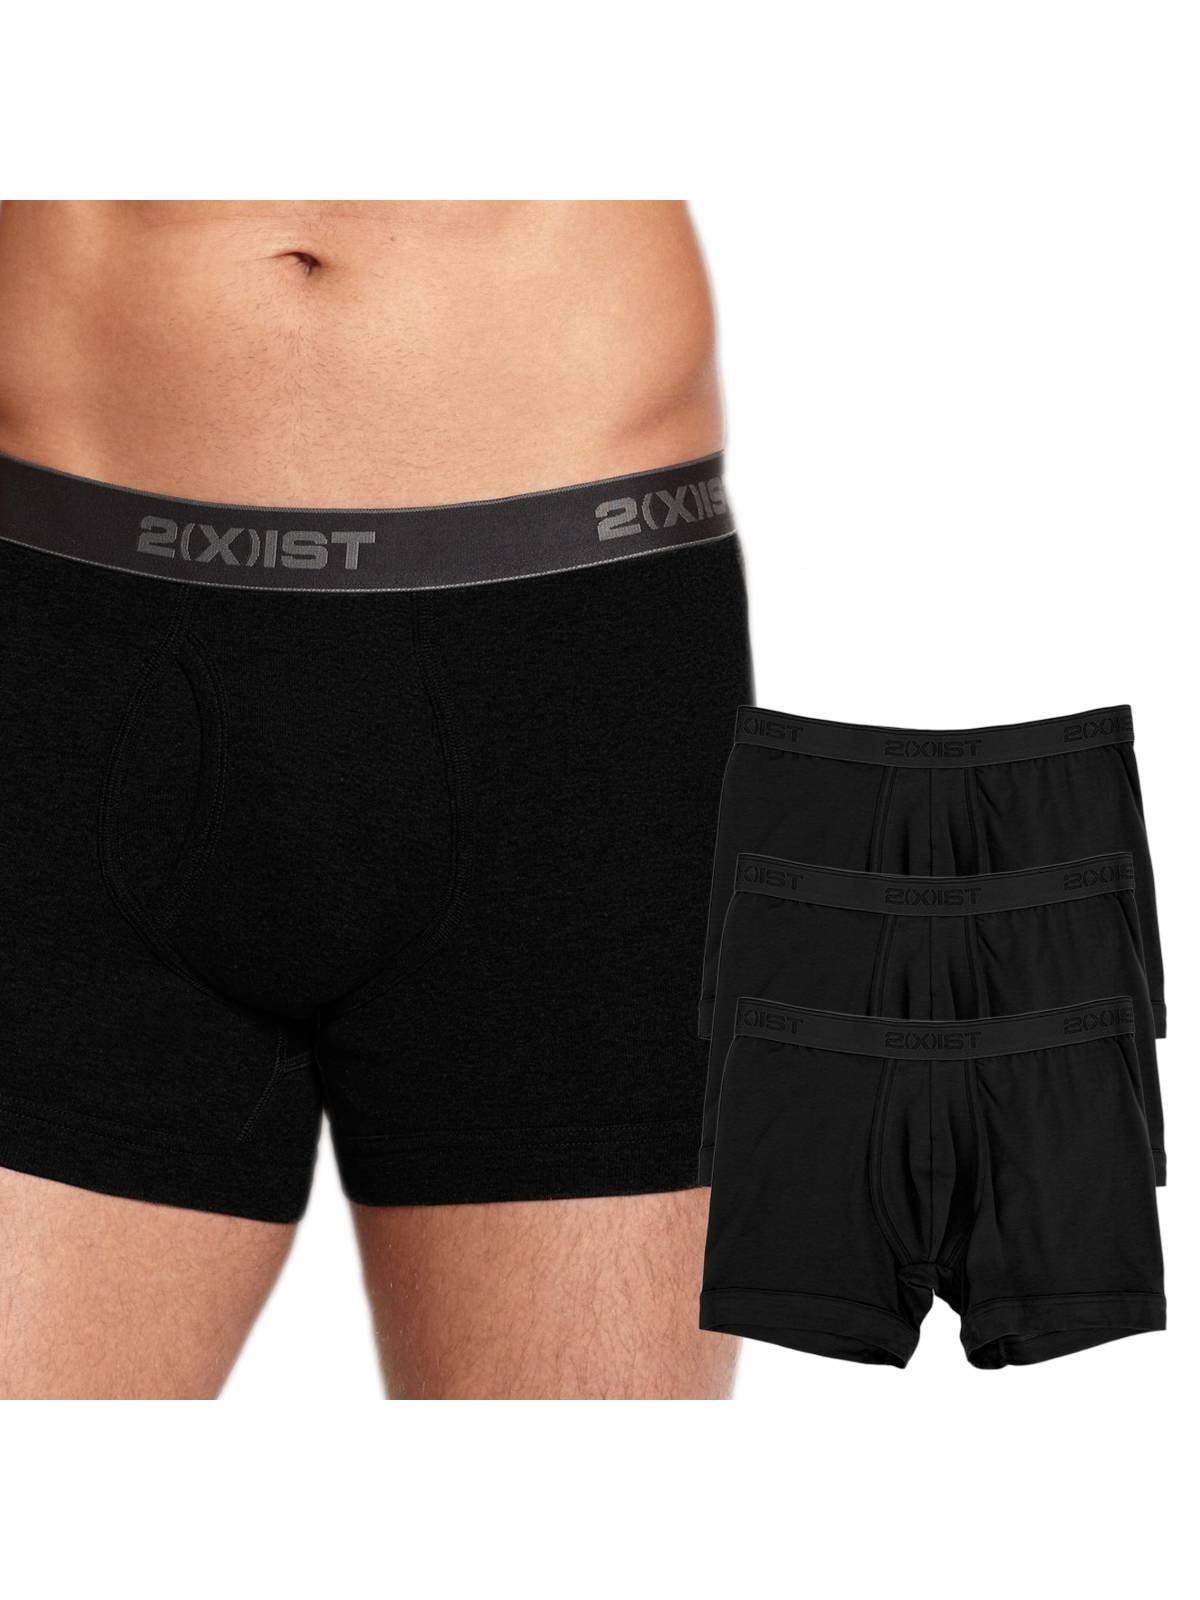 Men Soft Cotton Seamless Boxer Briefs Pouch Underwear Shorts Trunks Underpants 